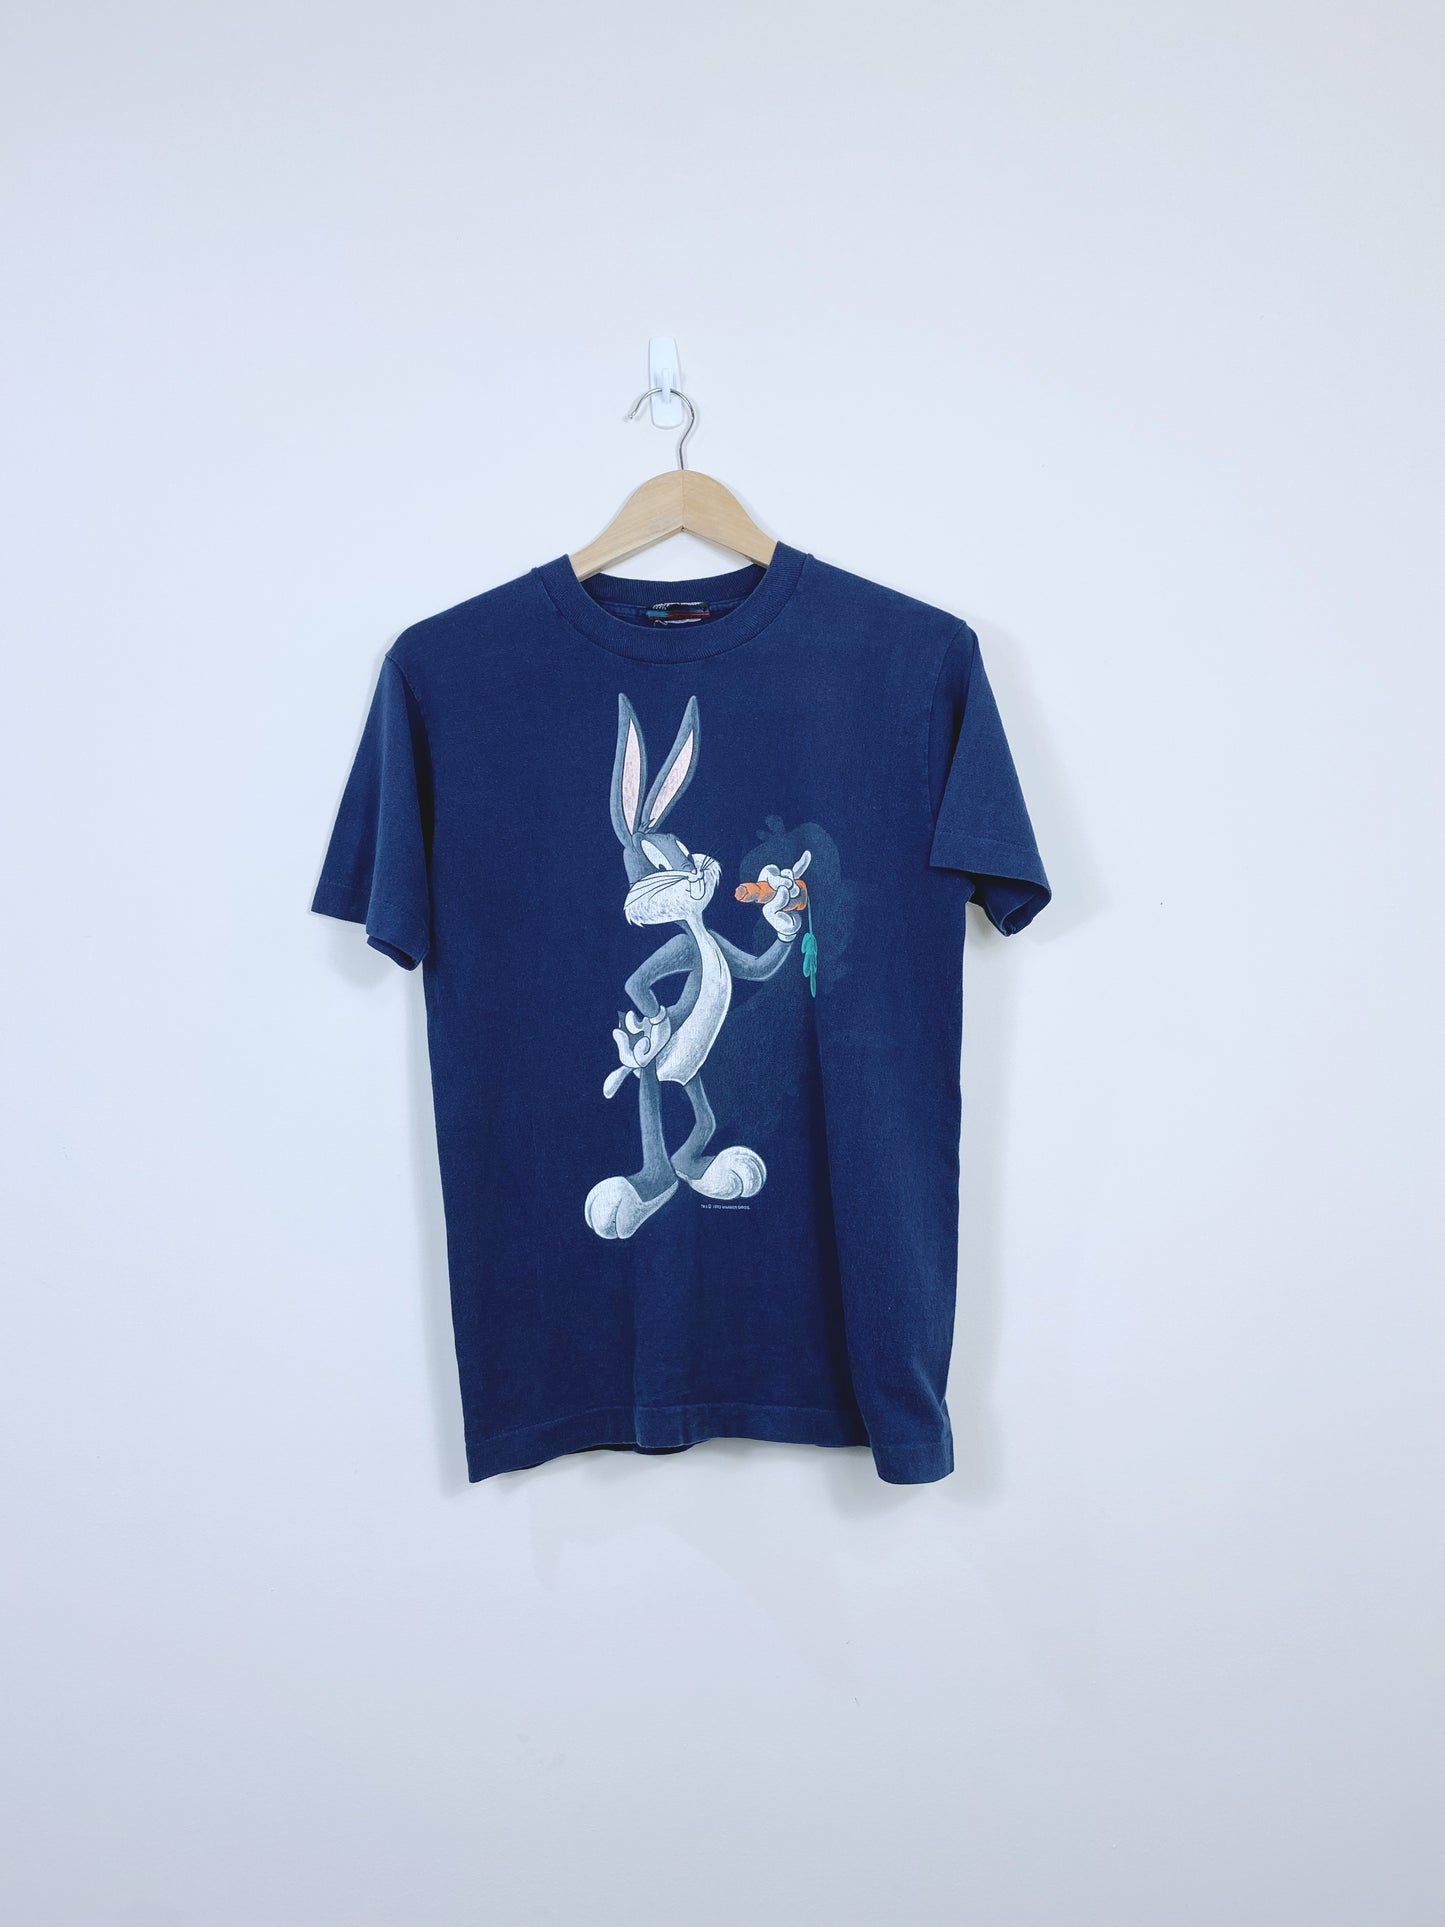 Vintage 1993 Looney Tunes T-shirt